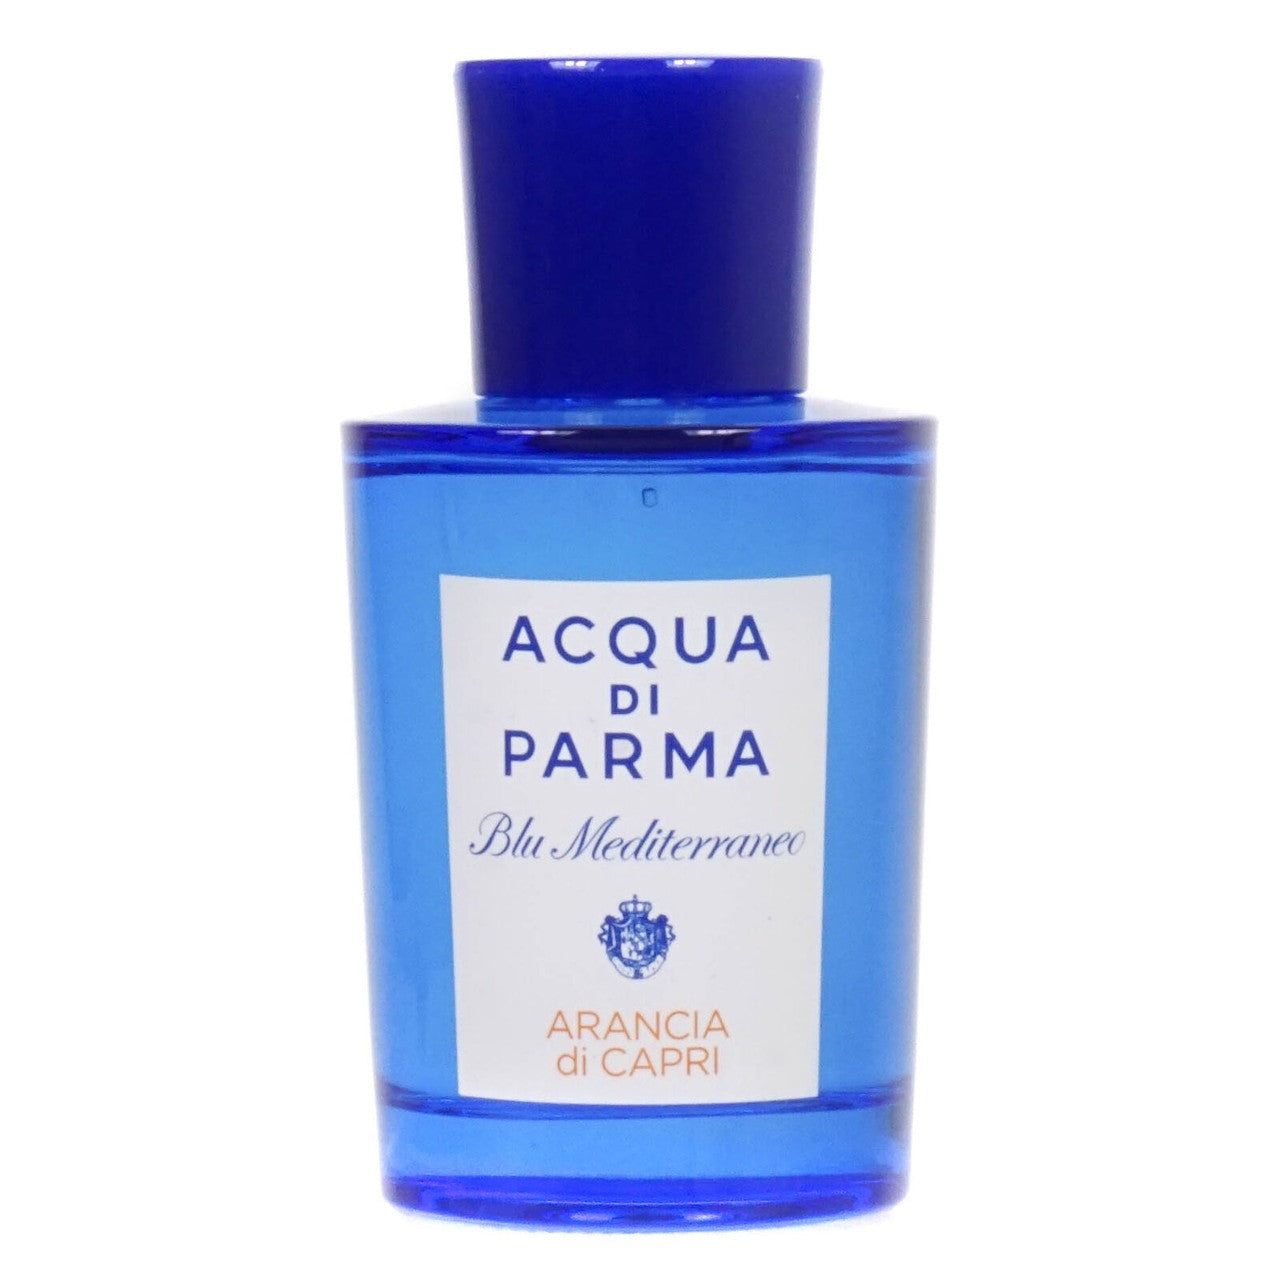 Acqua di Parma Blu Mediterraneo Arancia di Capri Eau de Toilette 75ml Spray